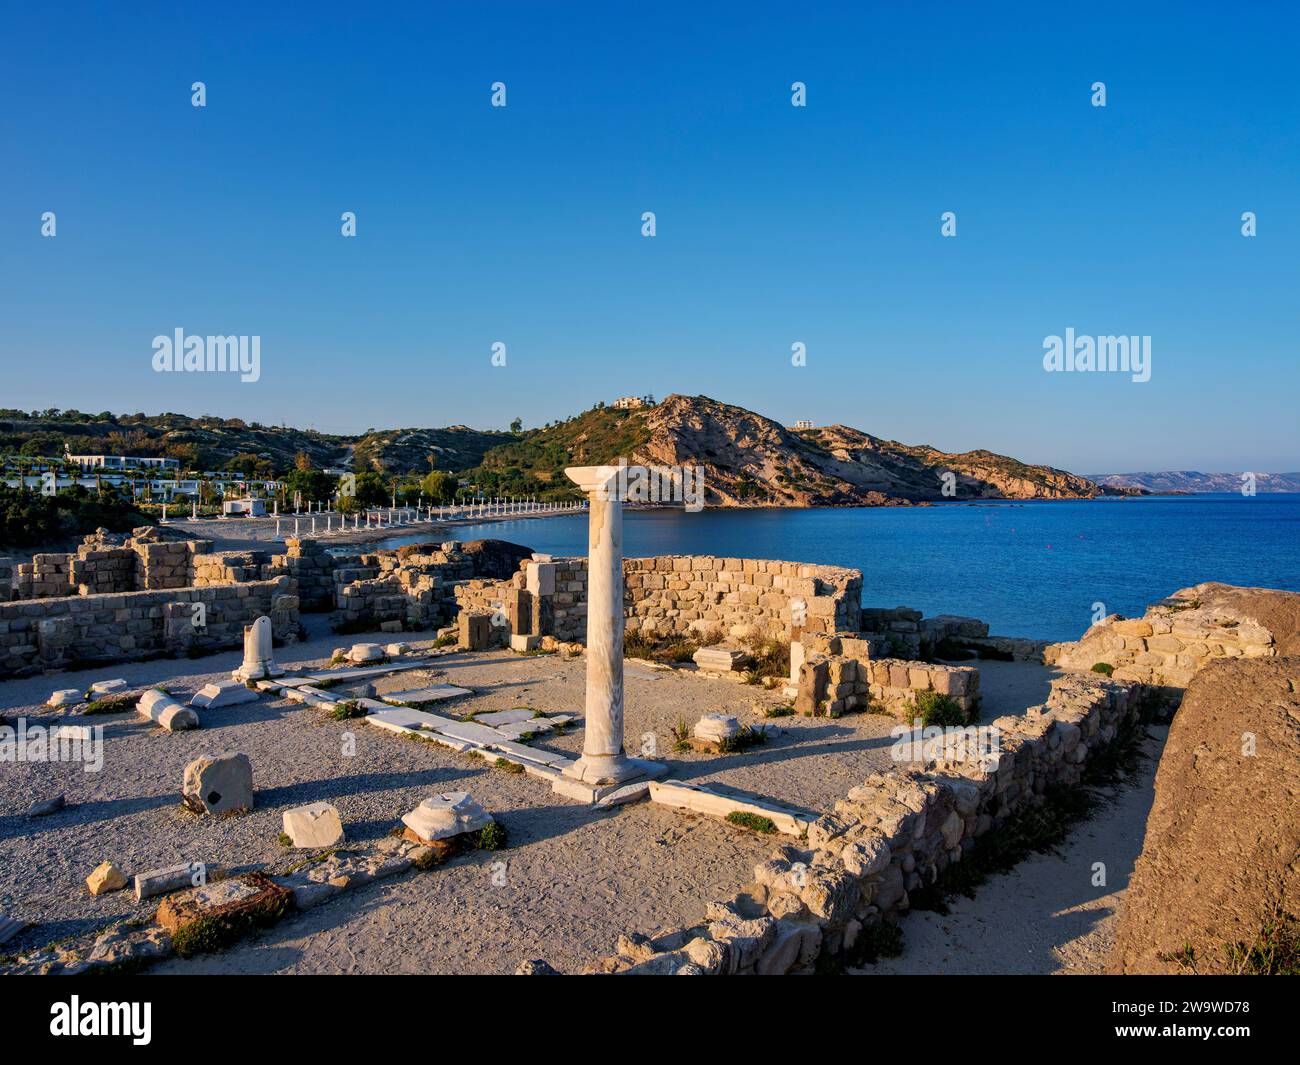 St. Stefanos Basilica Ruins at sunset, Agios Stefanos Beach, Kos Island, Dodecanese, Greece Stock Photo